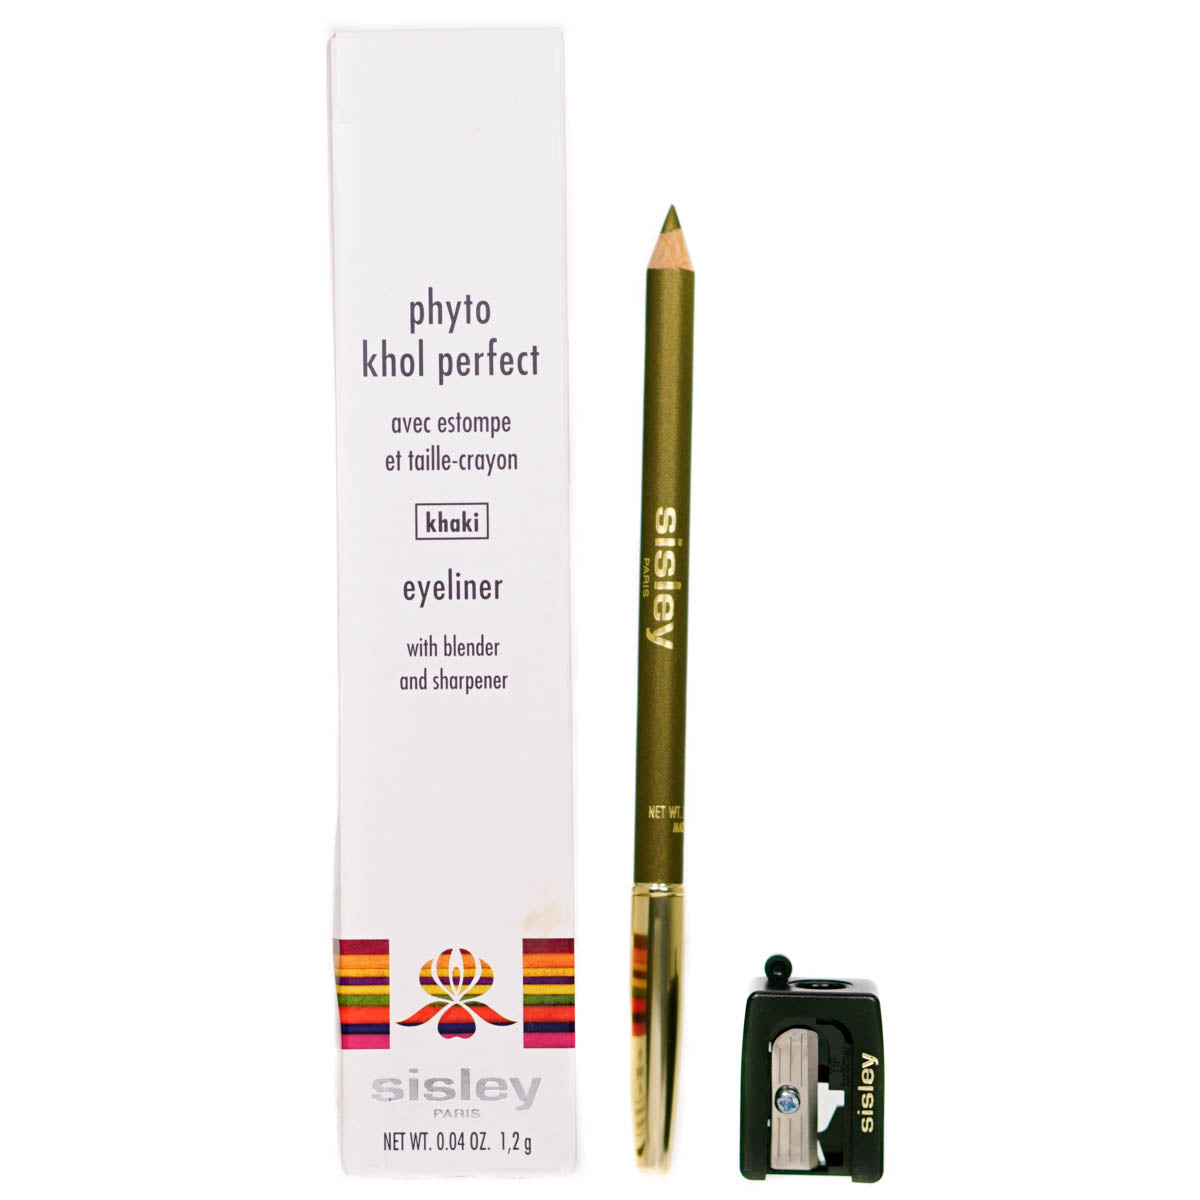 Sisley Phyto Khol Perfect Eyeliner Pencil Khaki